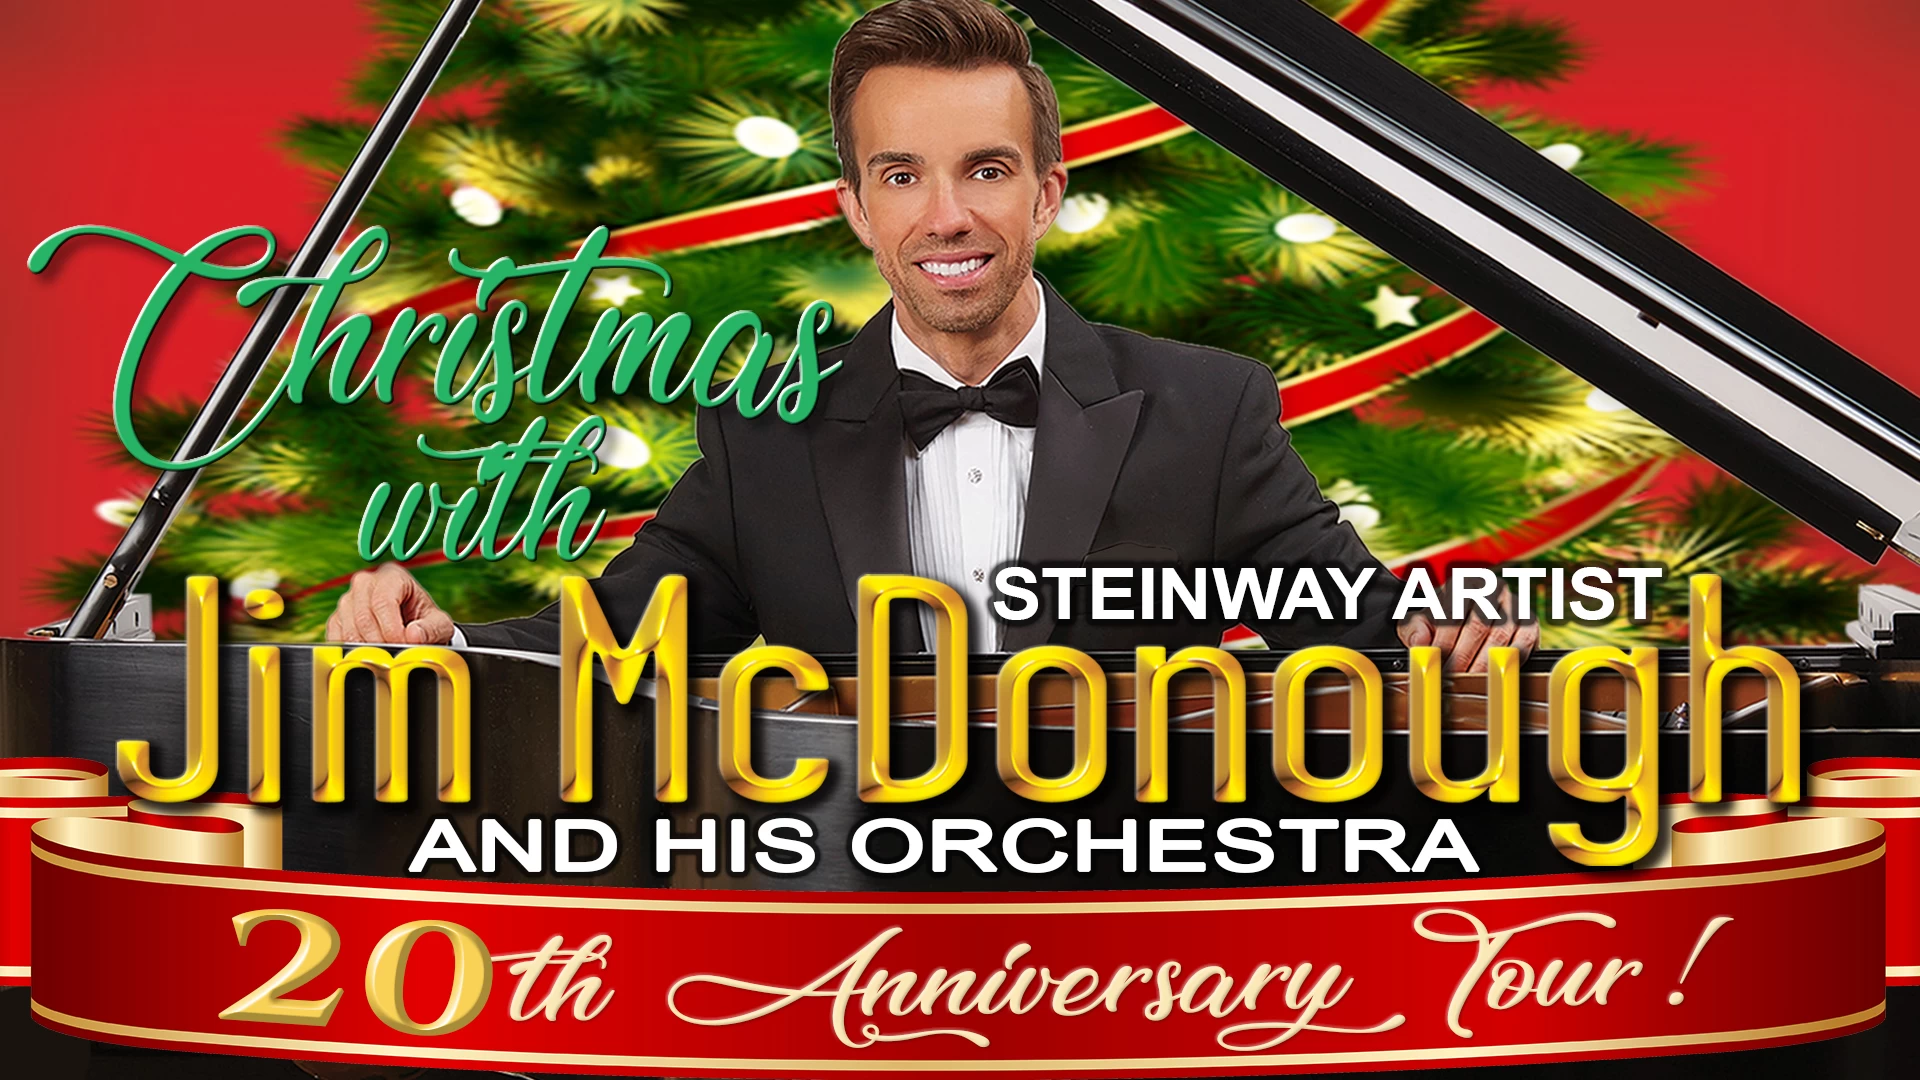 Jim McDonough's 20th Anniversary Christmas Tour